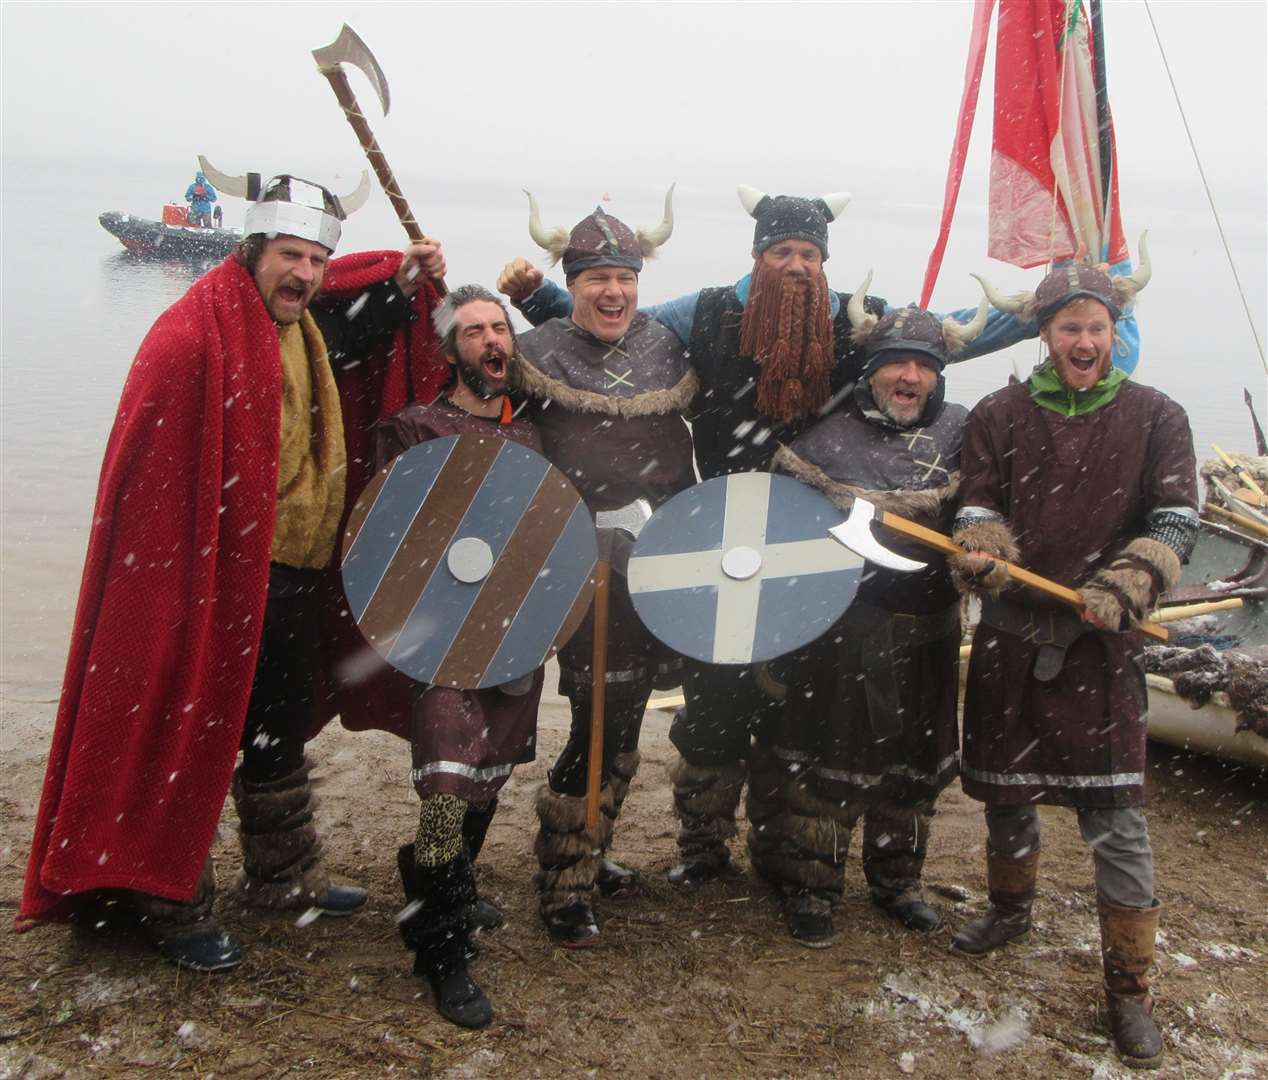 The Vikings return